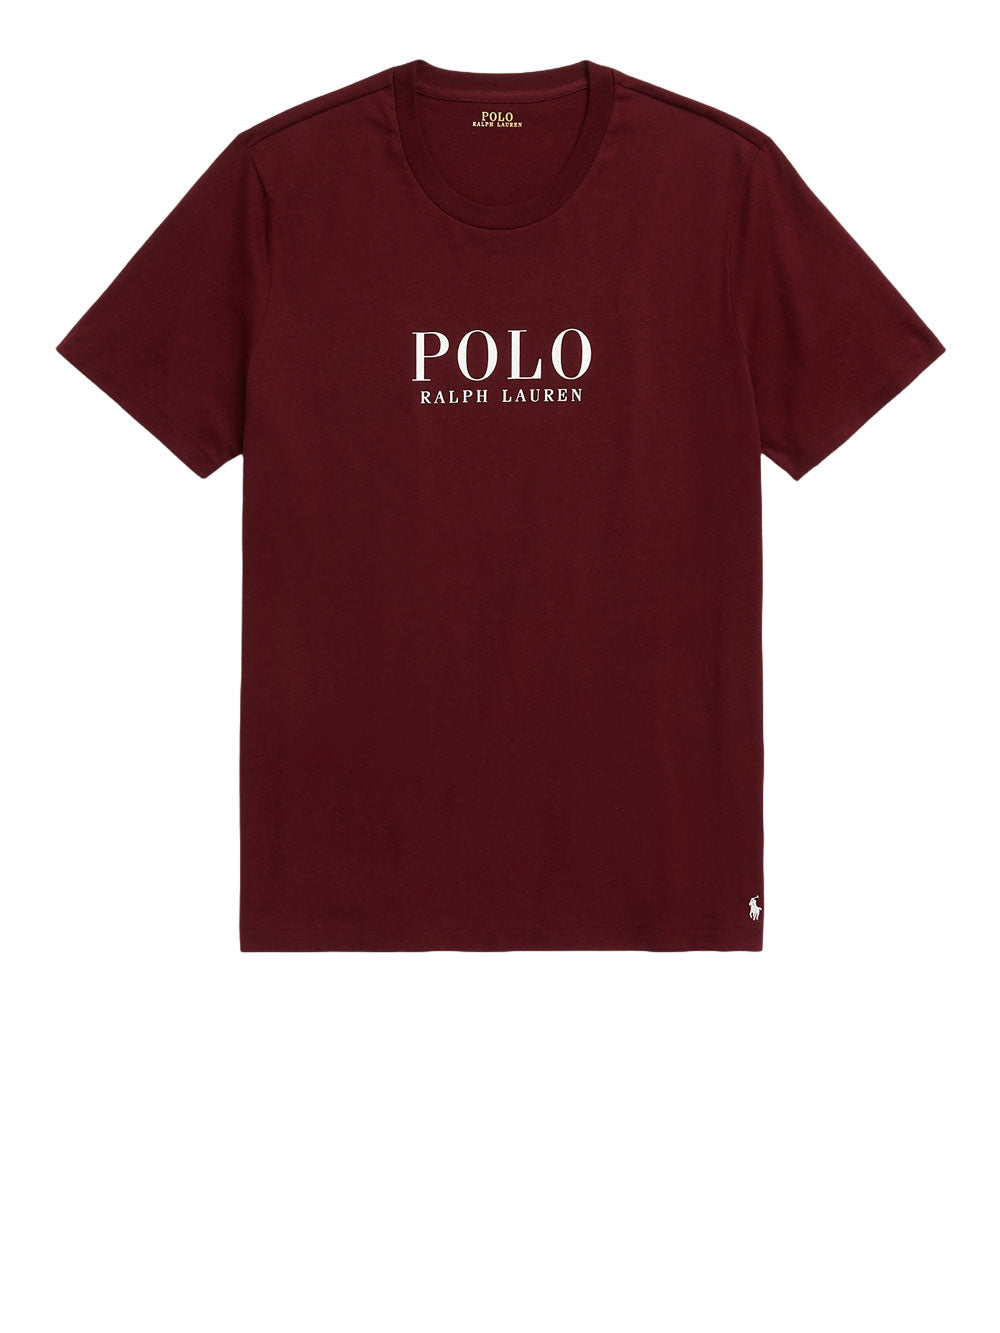 POLO RALPH LAUREN T-shirt Uomo - Rosso